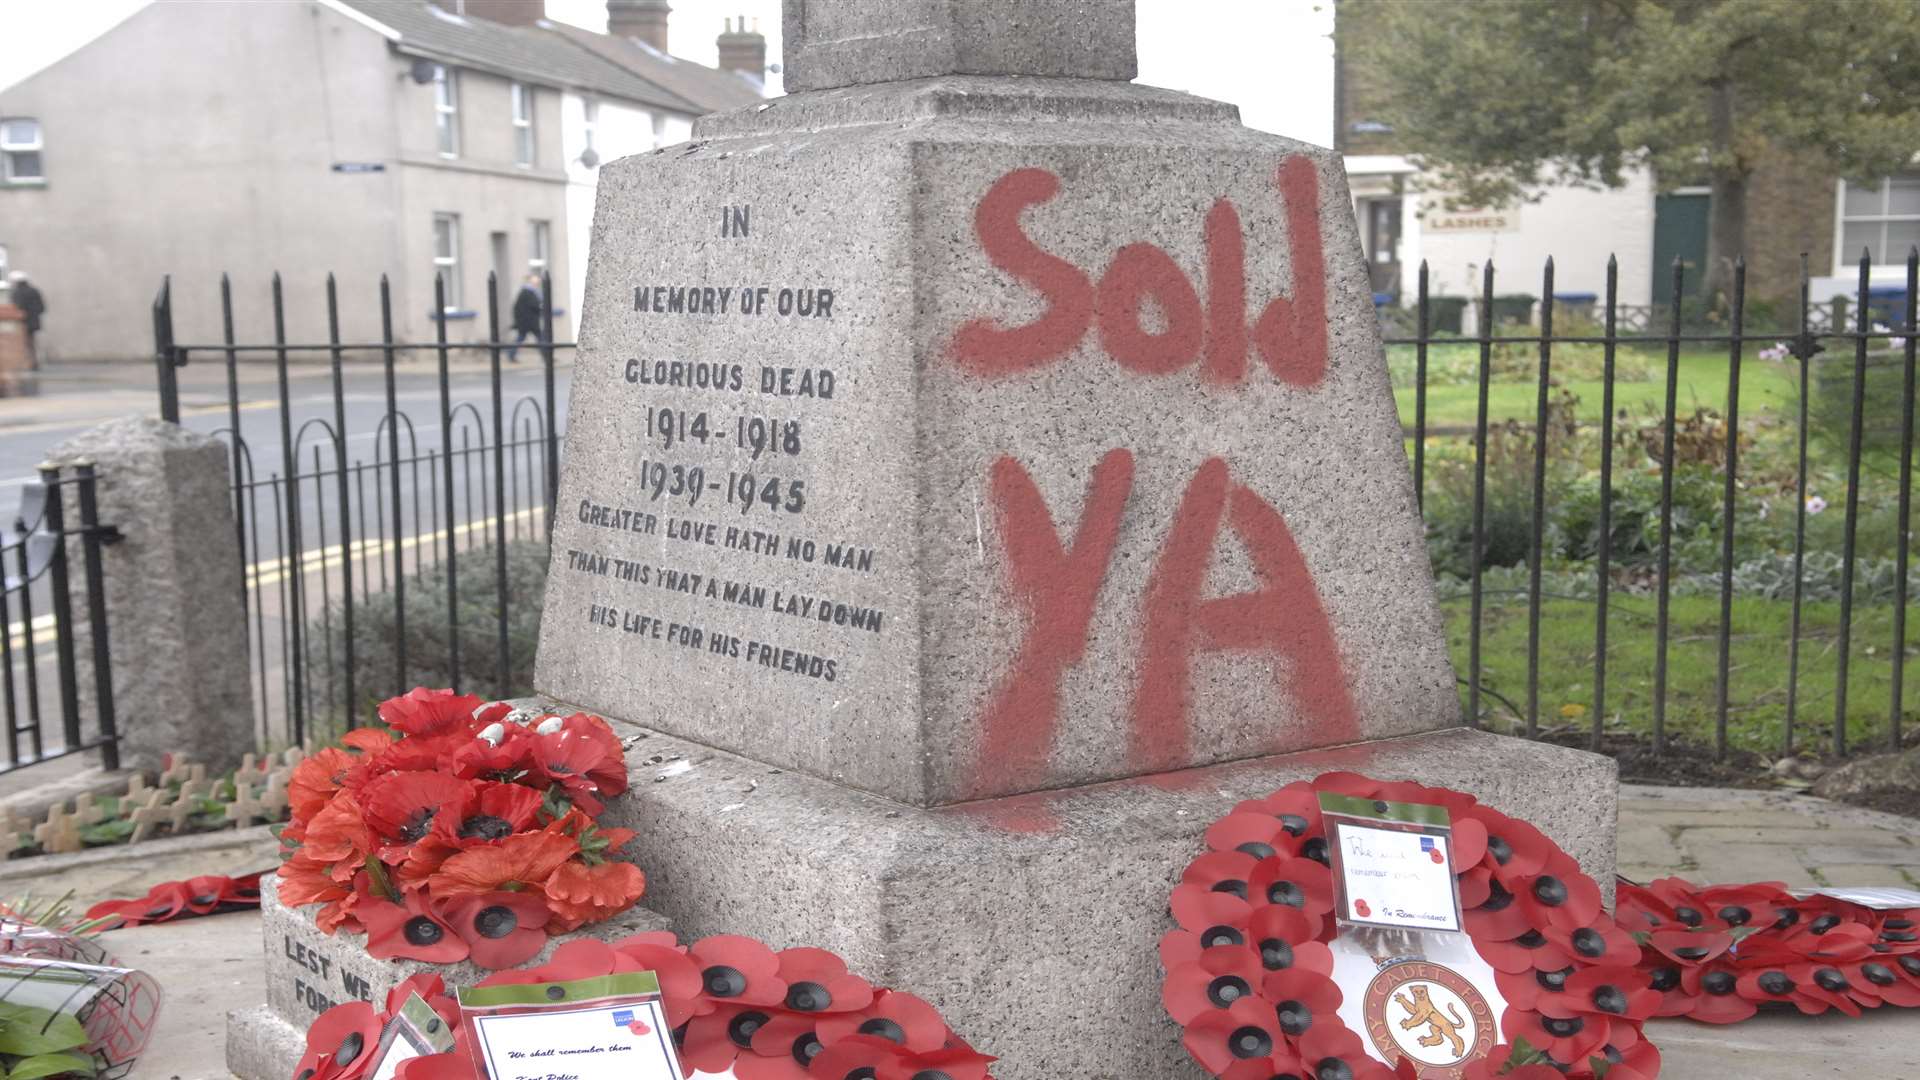 Graffiti on the Faversham War Memorial in Stone Street